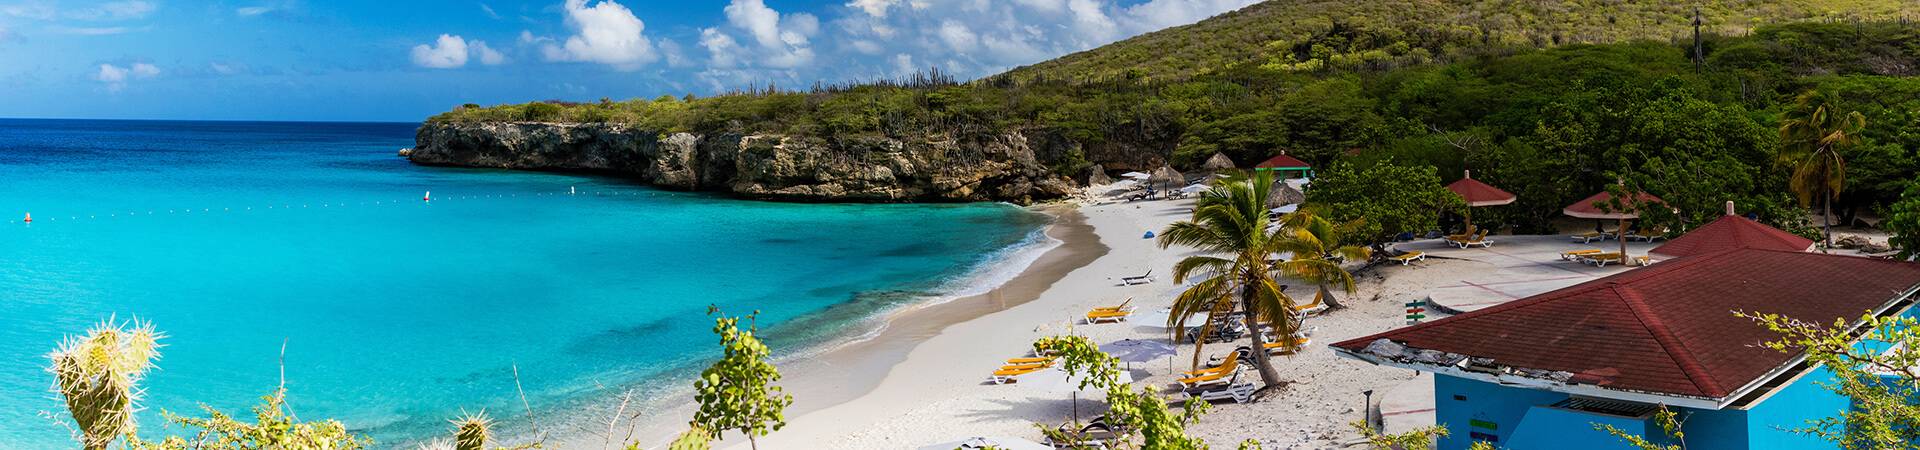 Aruba, Bonaire, Curacao, ABC Inseln, Ferien, Badeferien